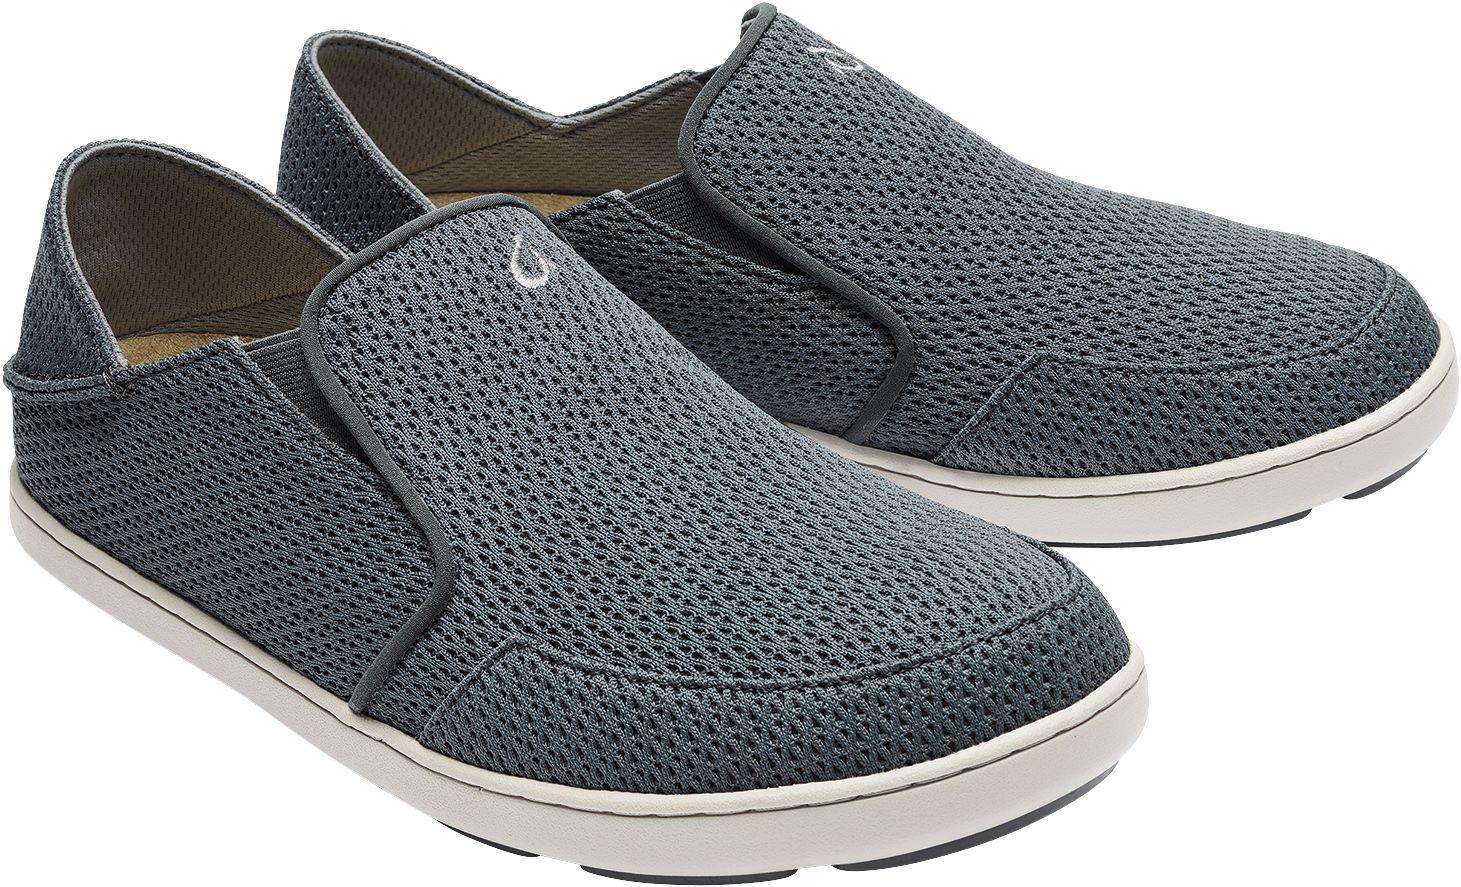 Olukai Nohea Mesh Slip-on Shoes in Grey (Gray) for Men - Lyst